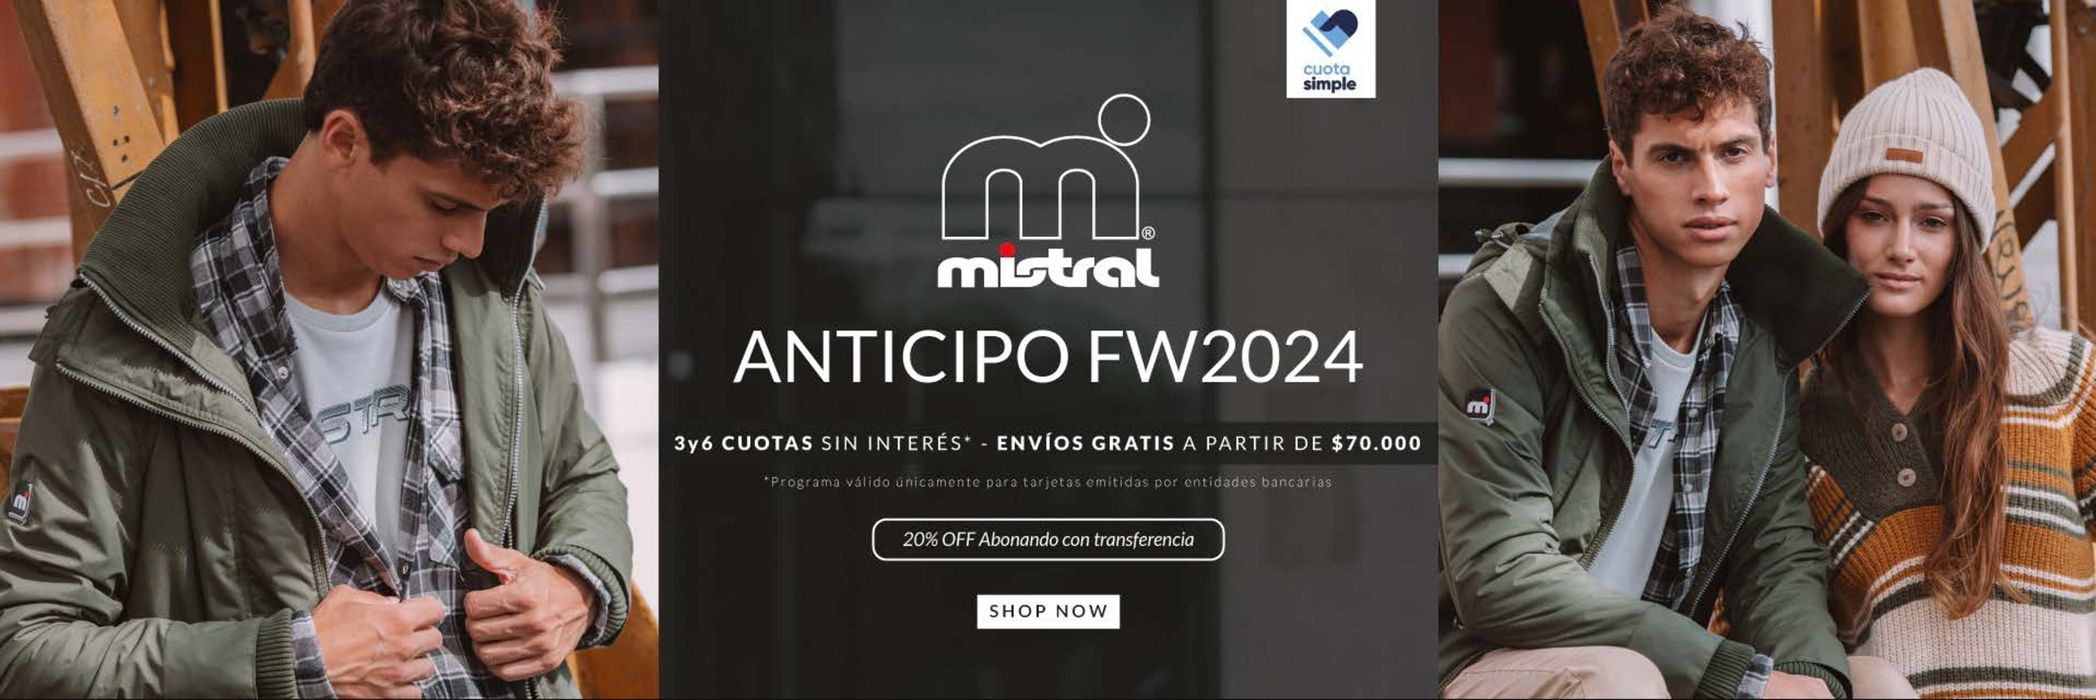 Catálogo Mistral en Villa Bosch | Anticipo FW2024 20% OFF con transferencia | 29/3/2024 - 29/4/2024